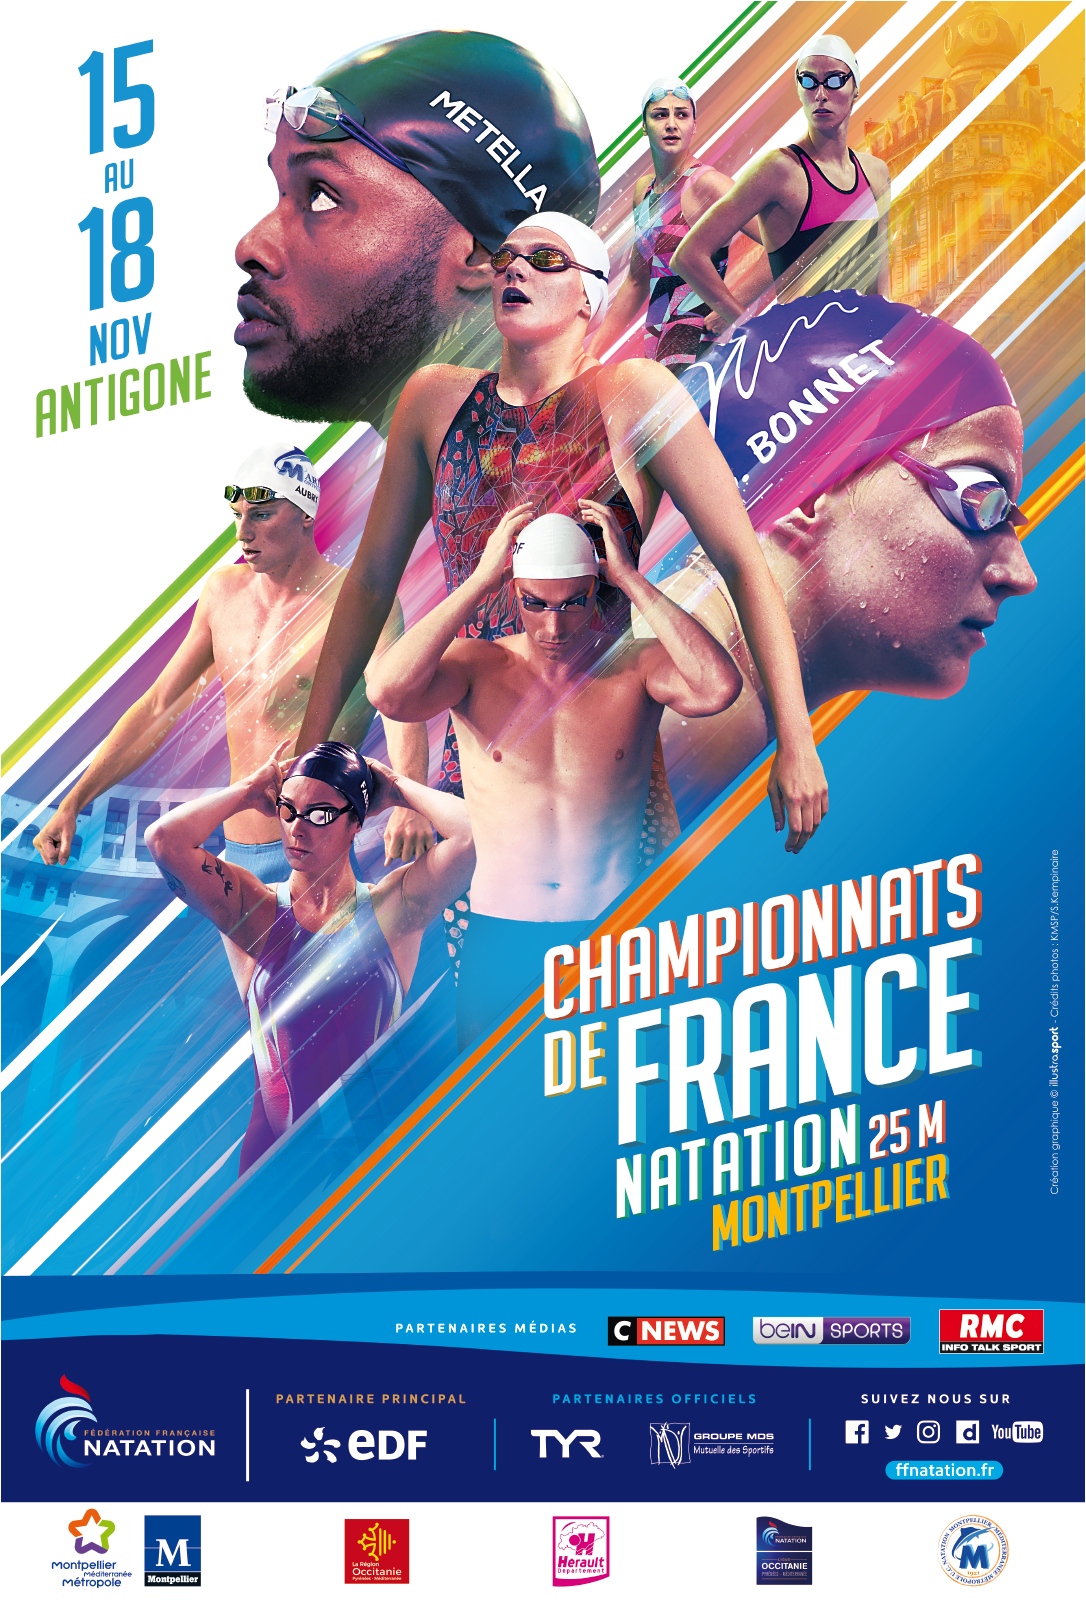 Championnats de France de natation